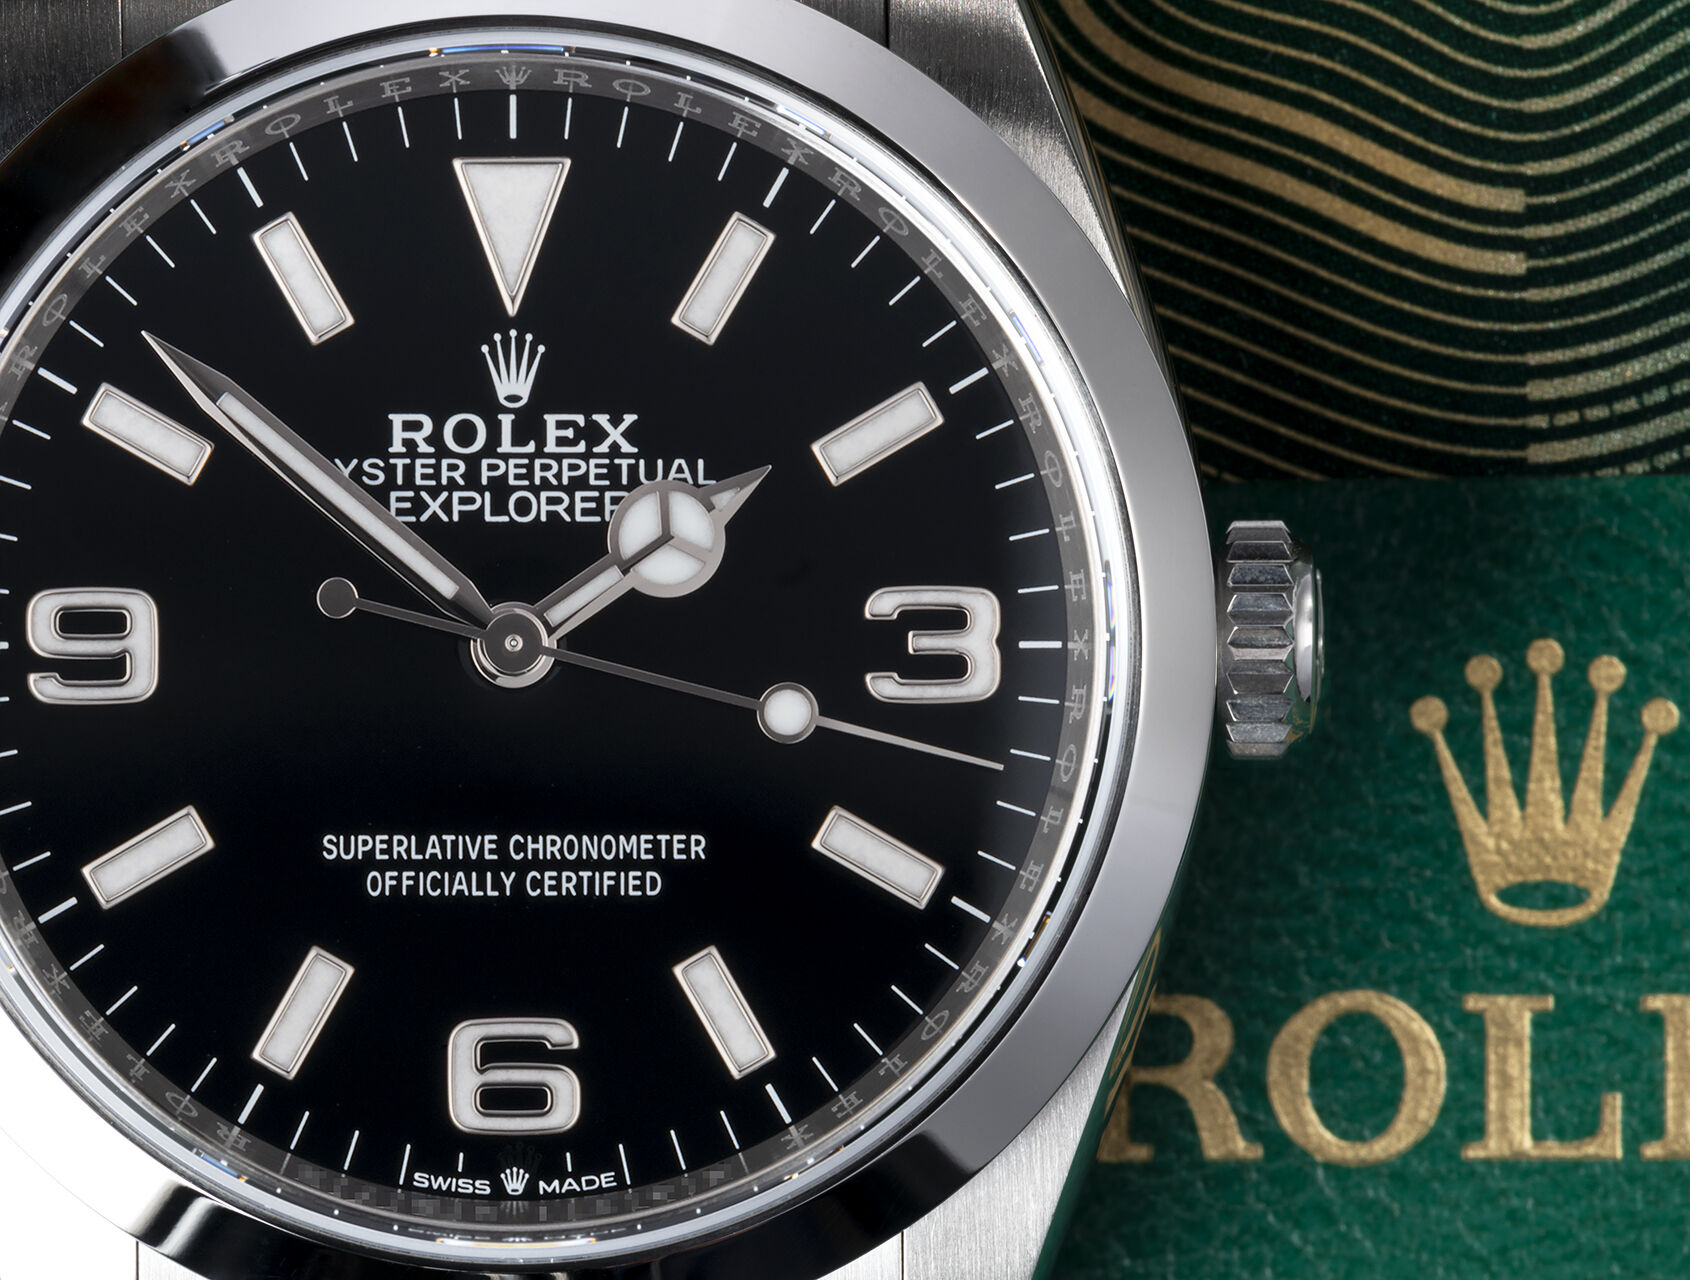 ref 124270 | 124270 - Latest Model | Rolex Explorer